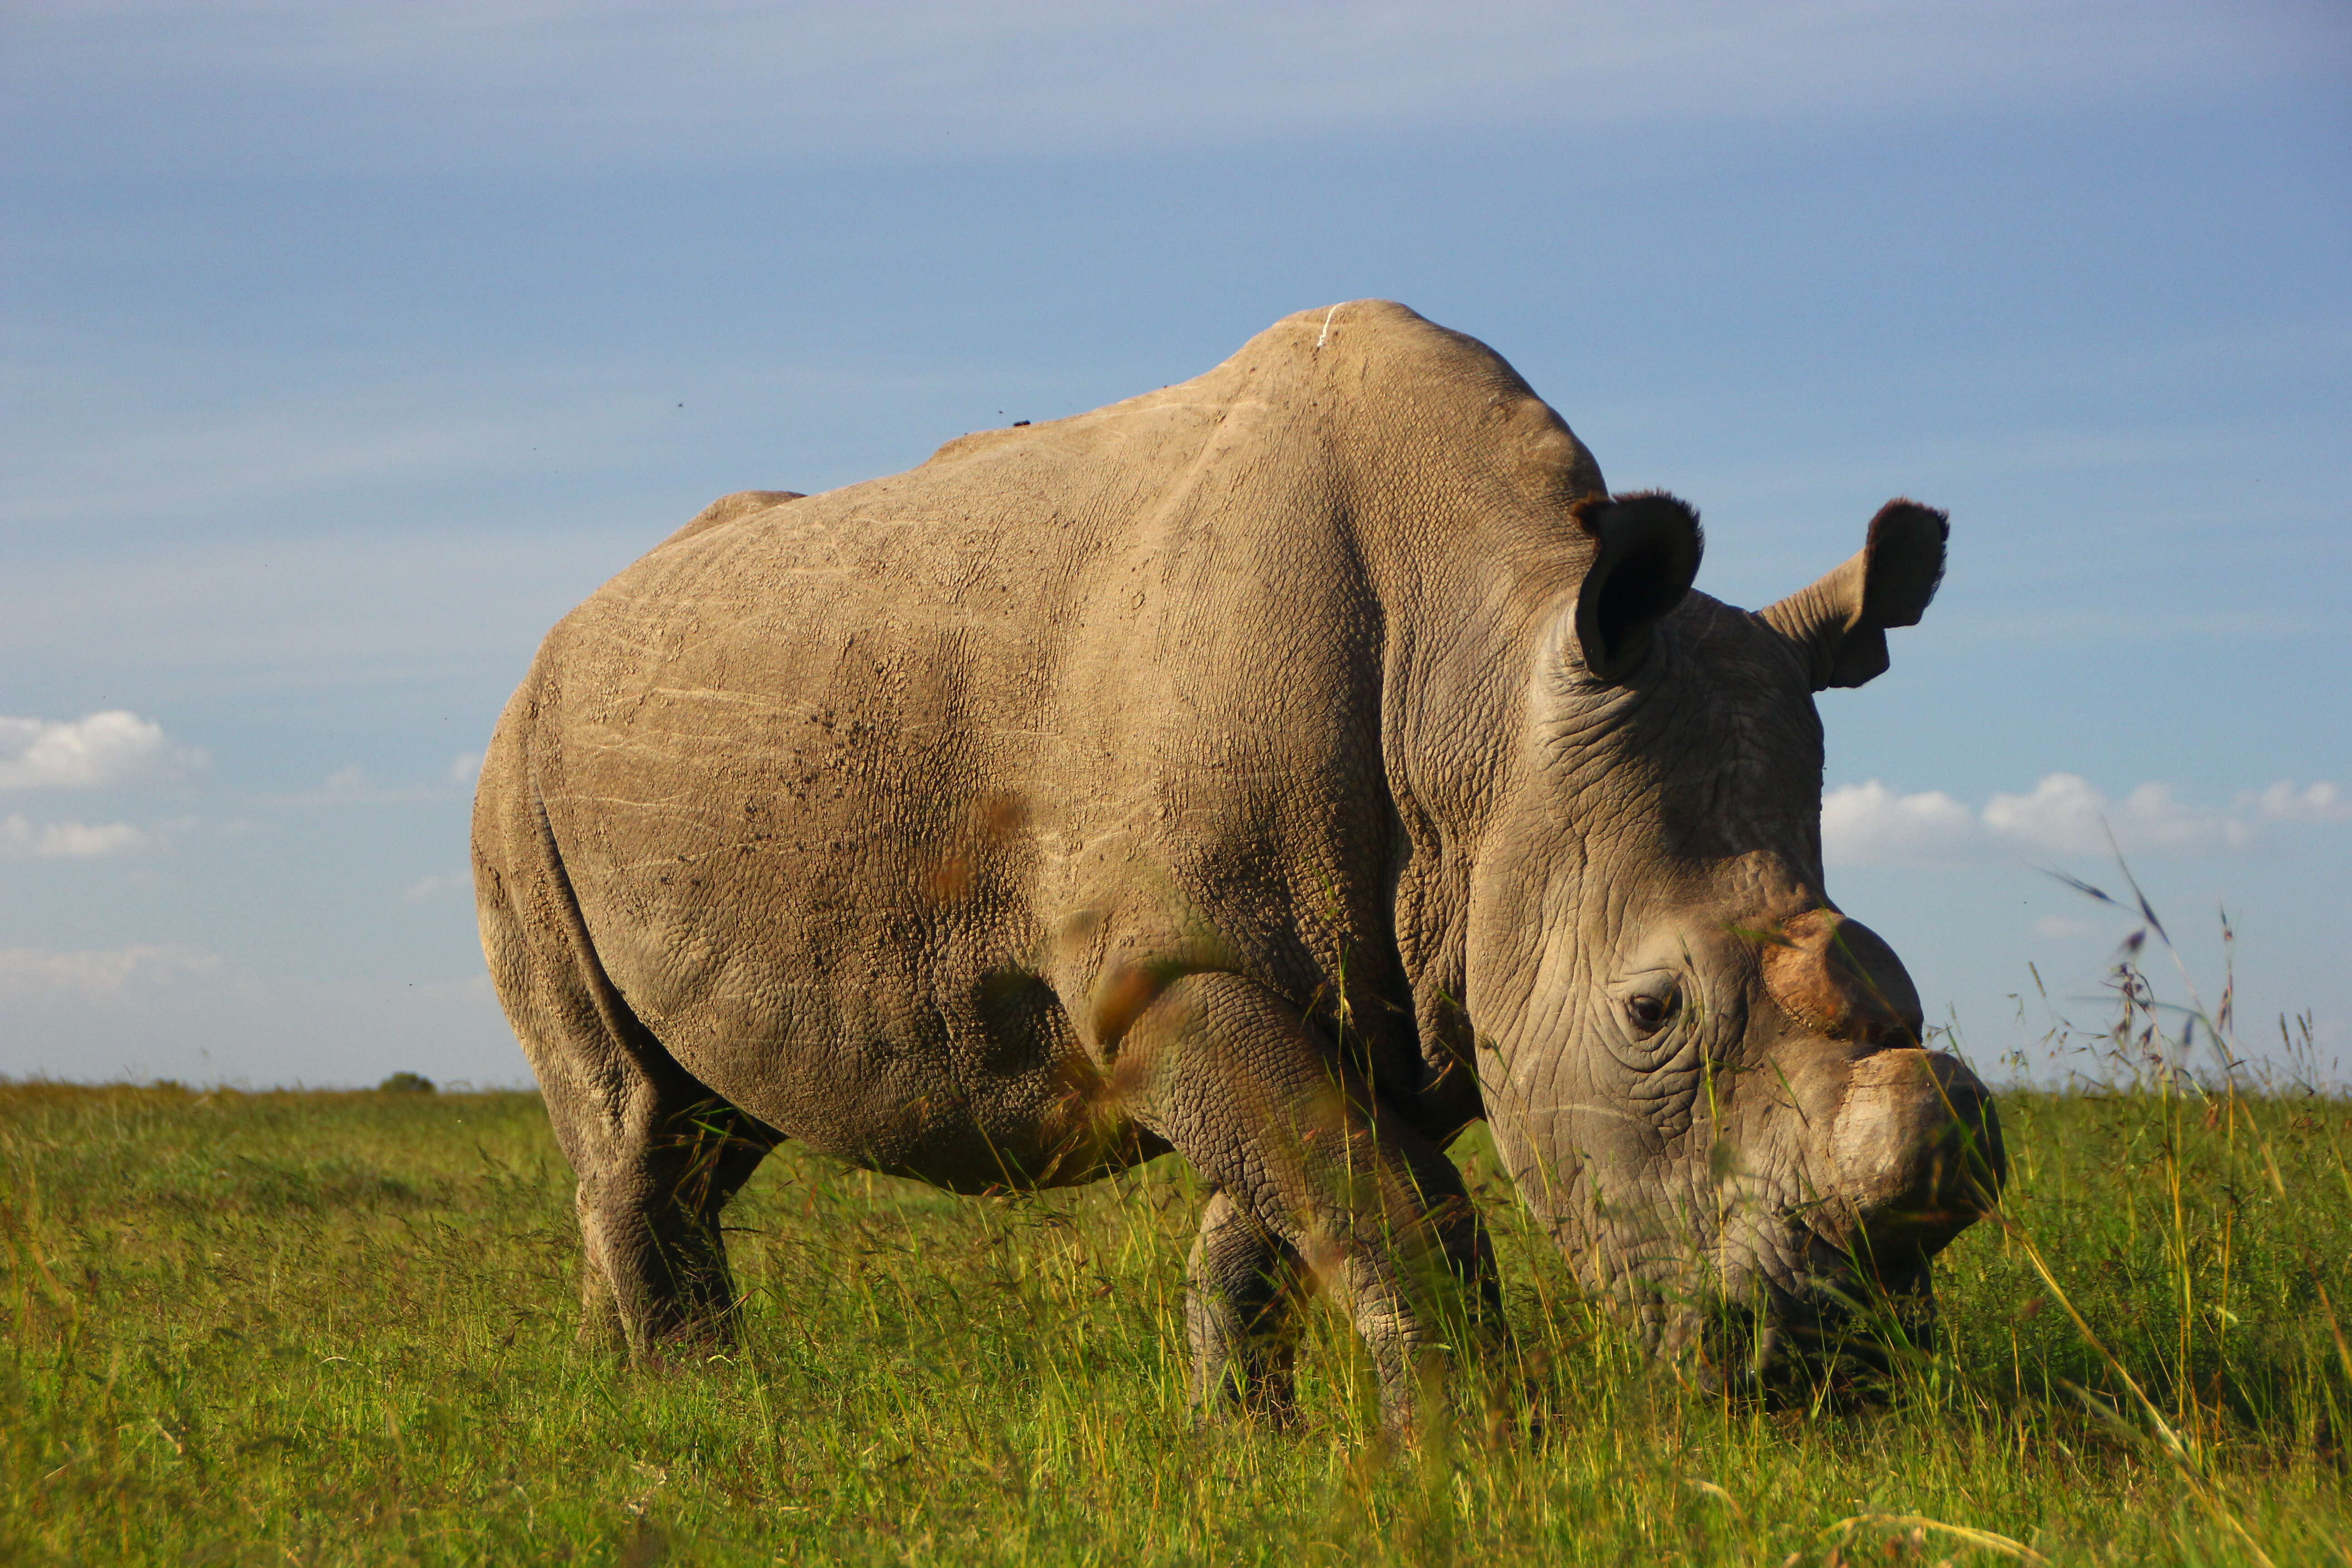 Sudan the last northern white rhino just died